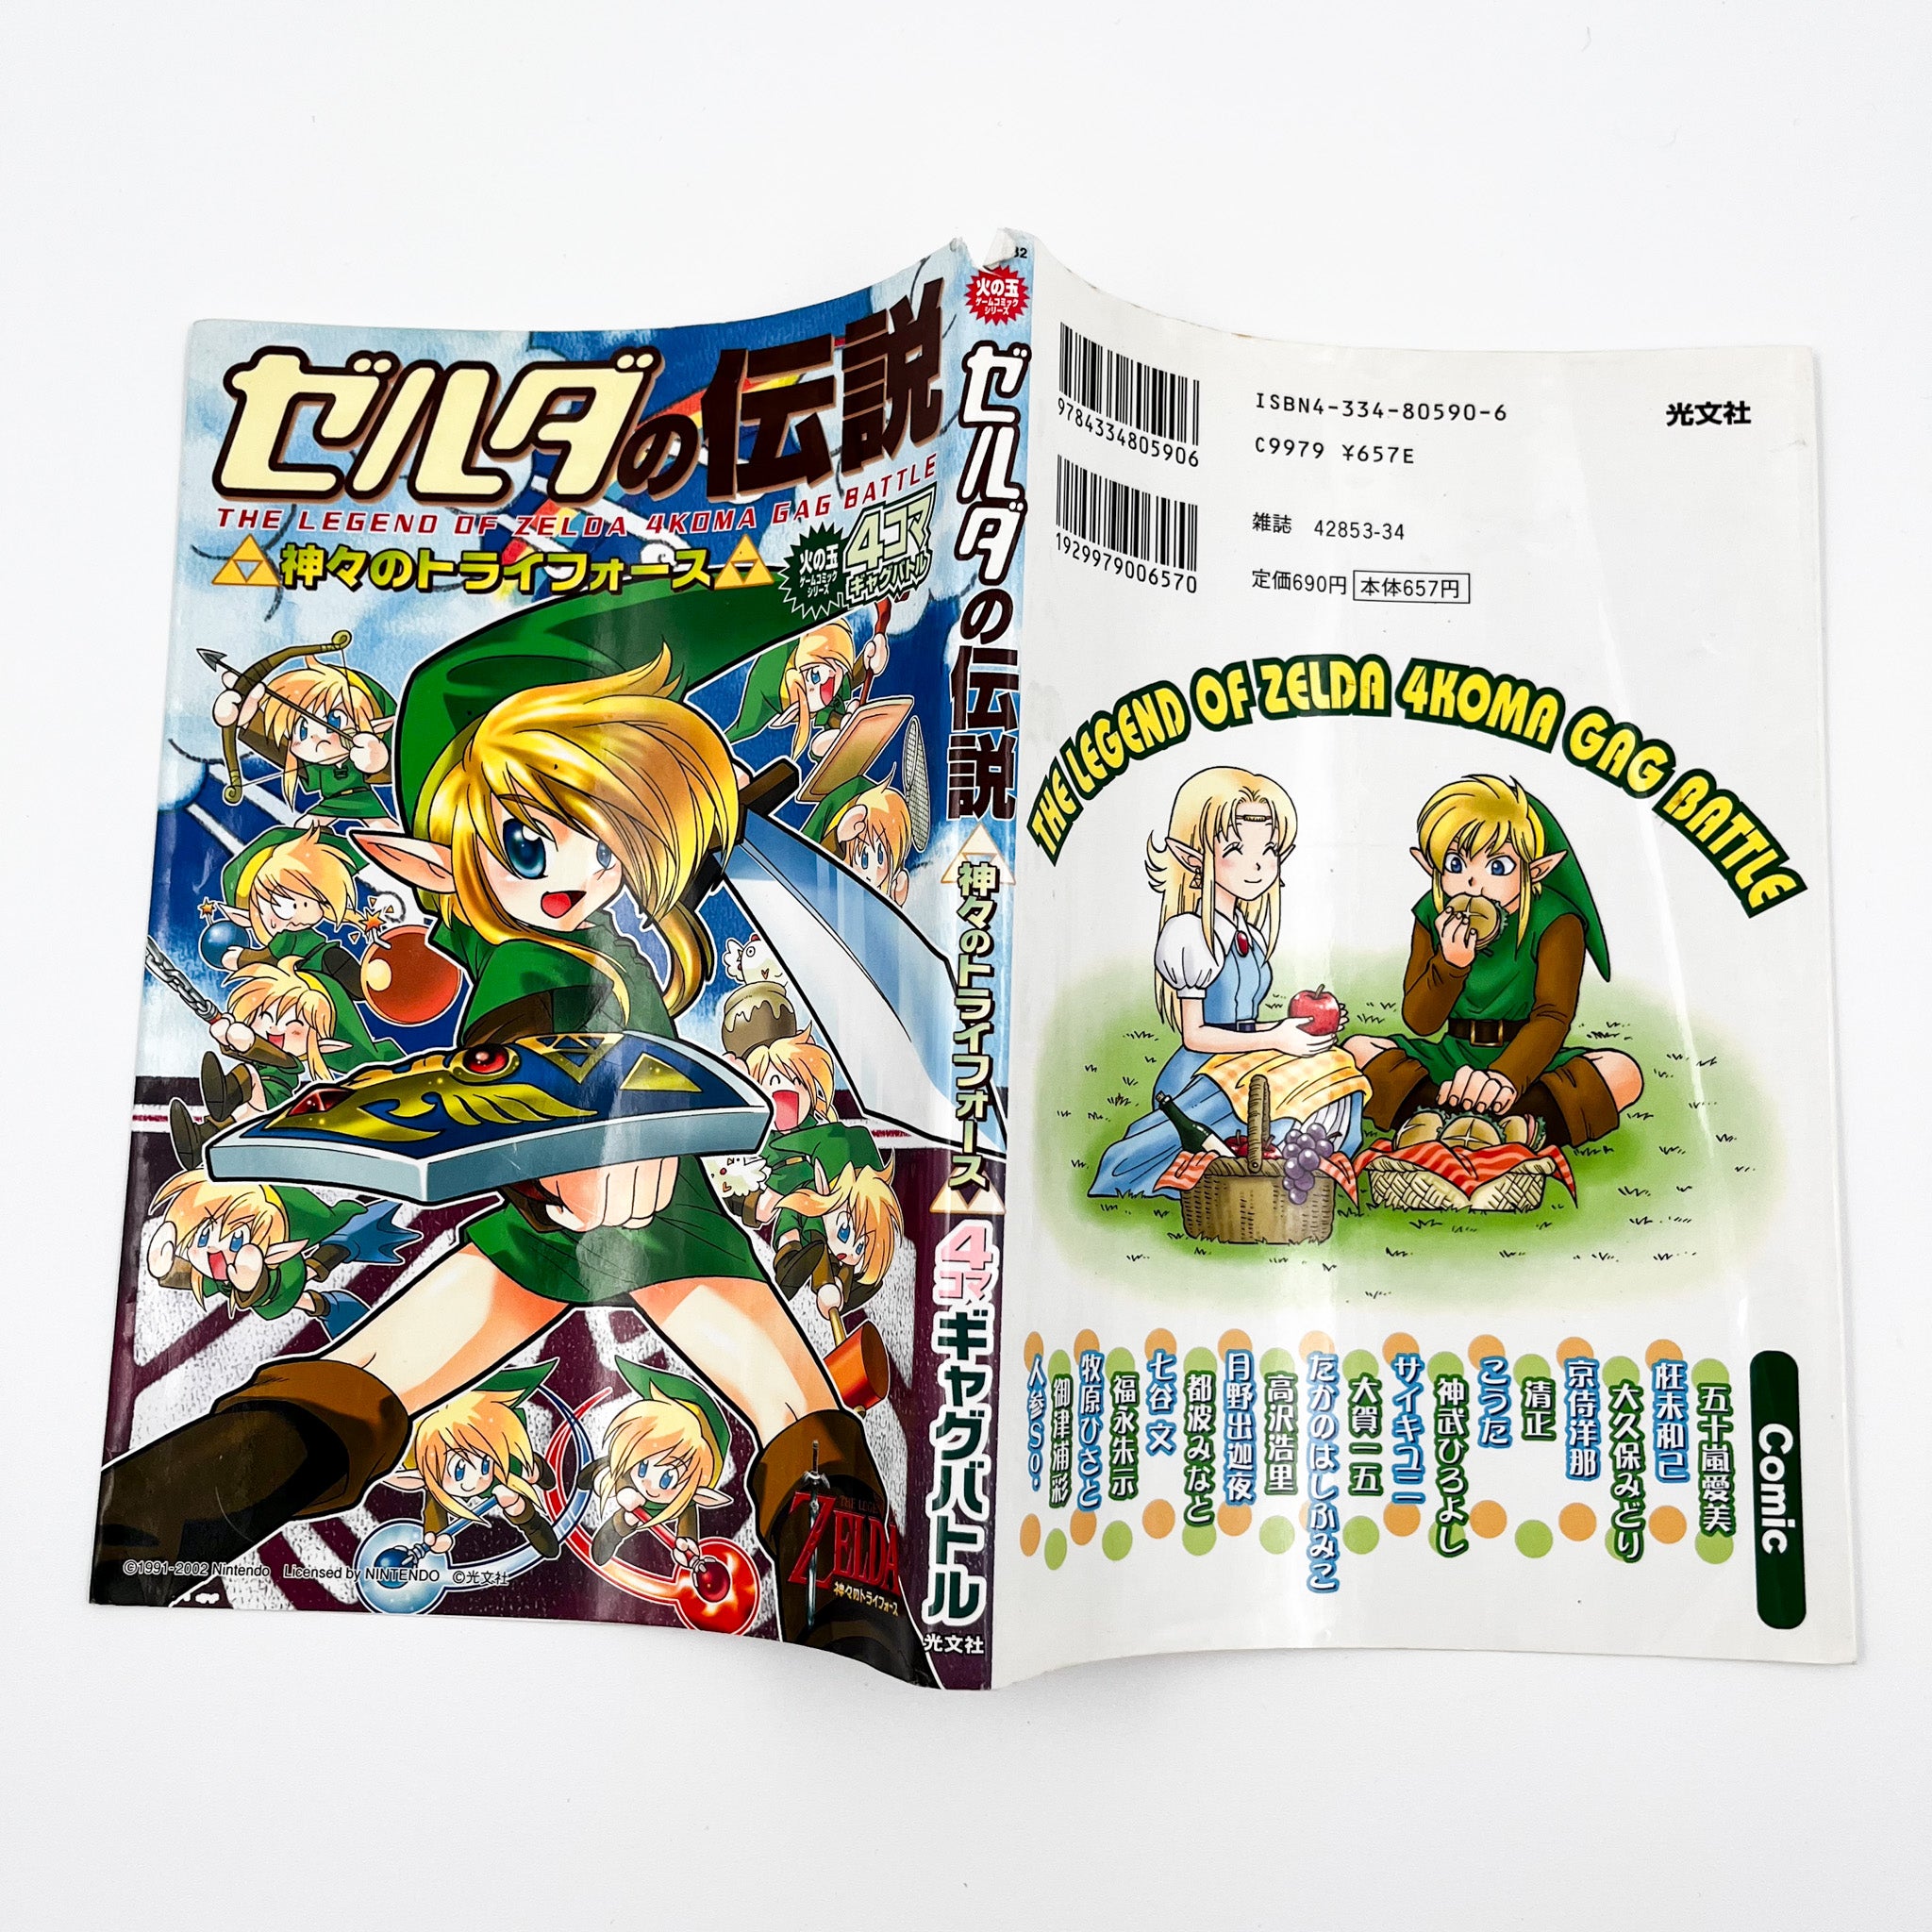 The Legend of Zelda: A Link to the Past 4koma Gag Battle (2003)